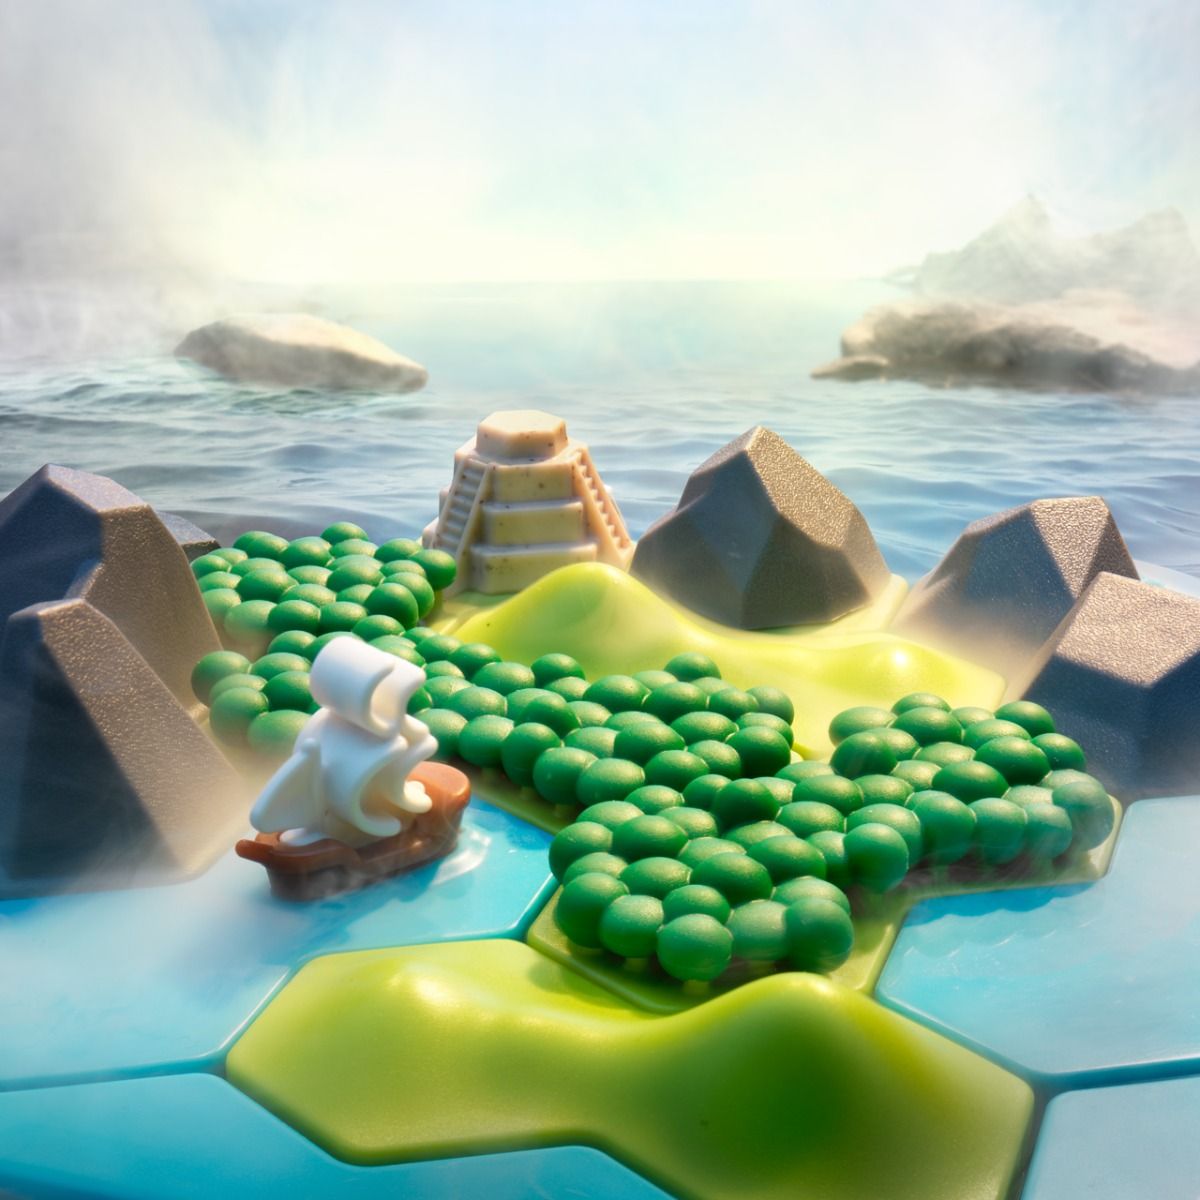 Treasure Island - SmartGames